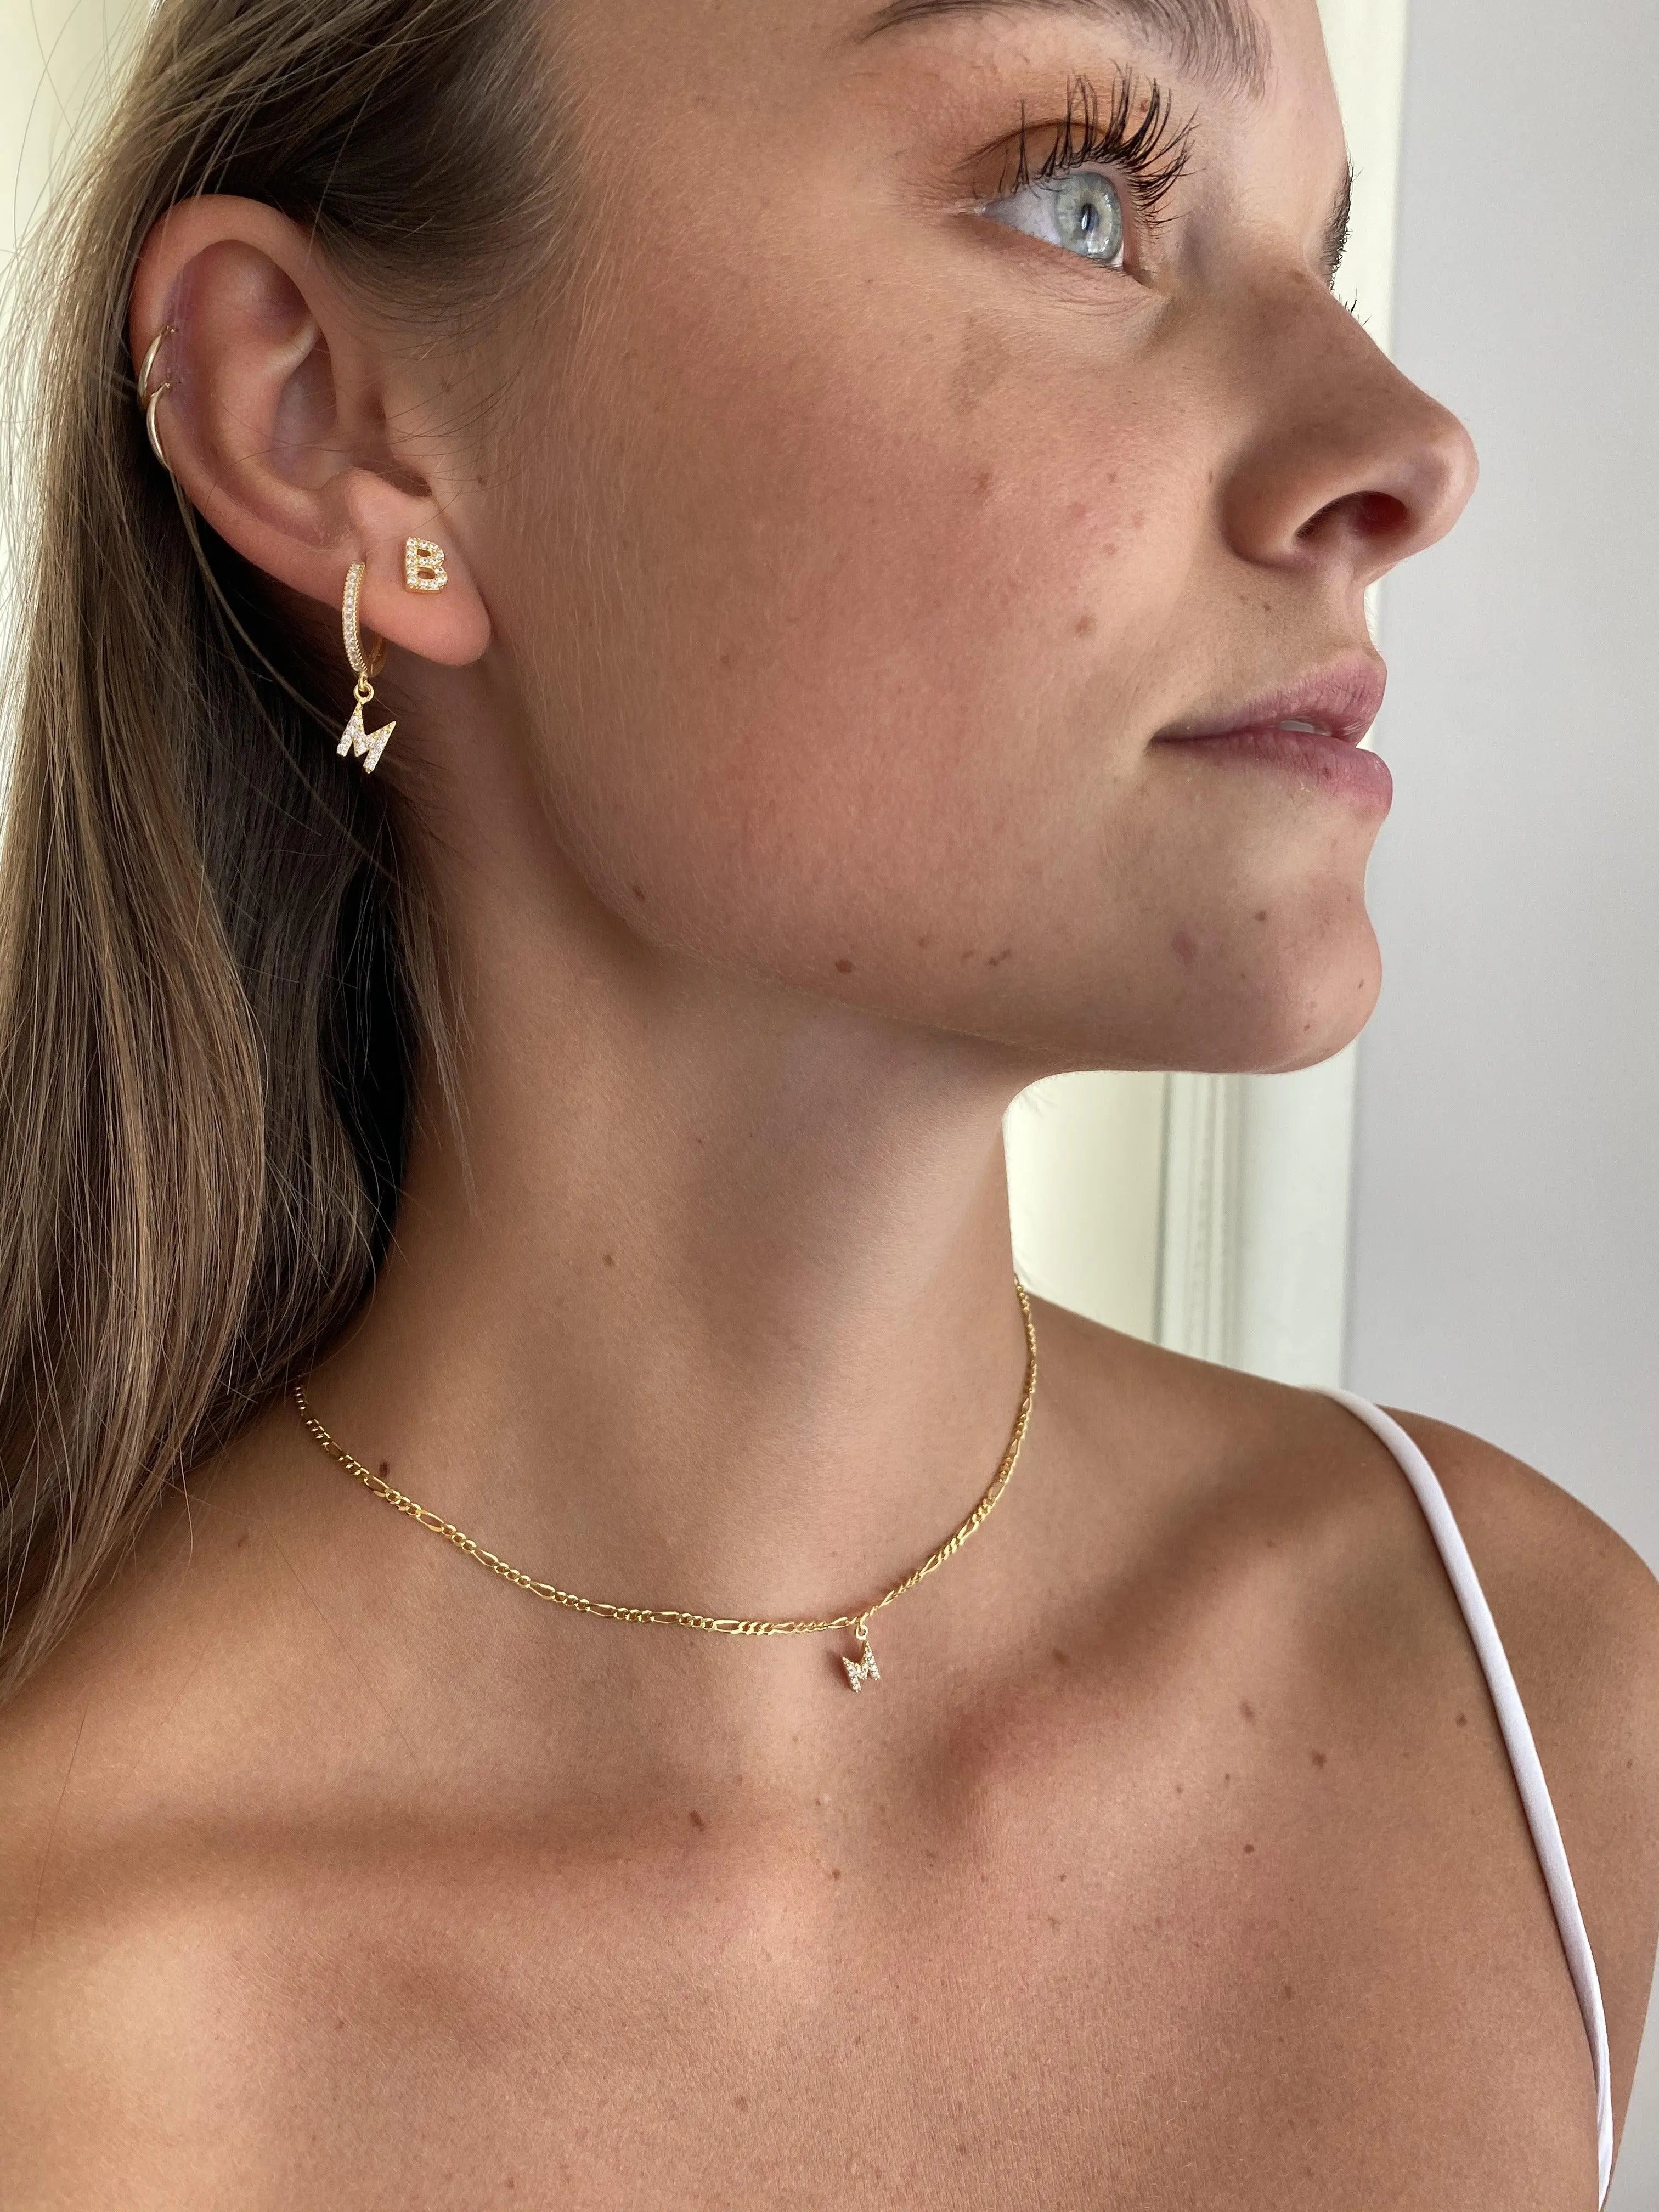 Isabel Buchstaben Ohrringe - Bonheur Jewellery